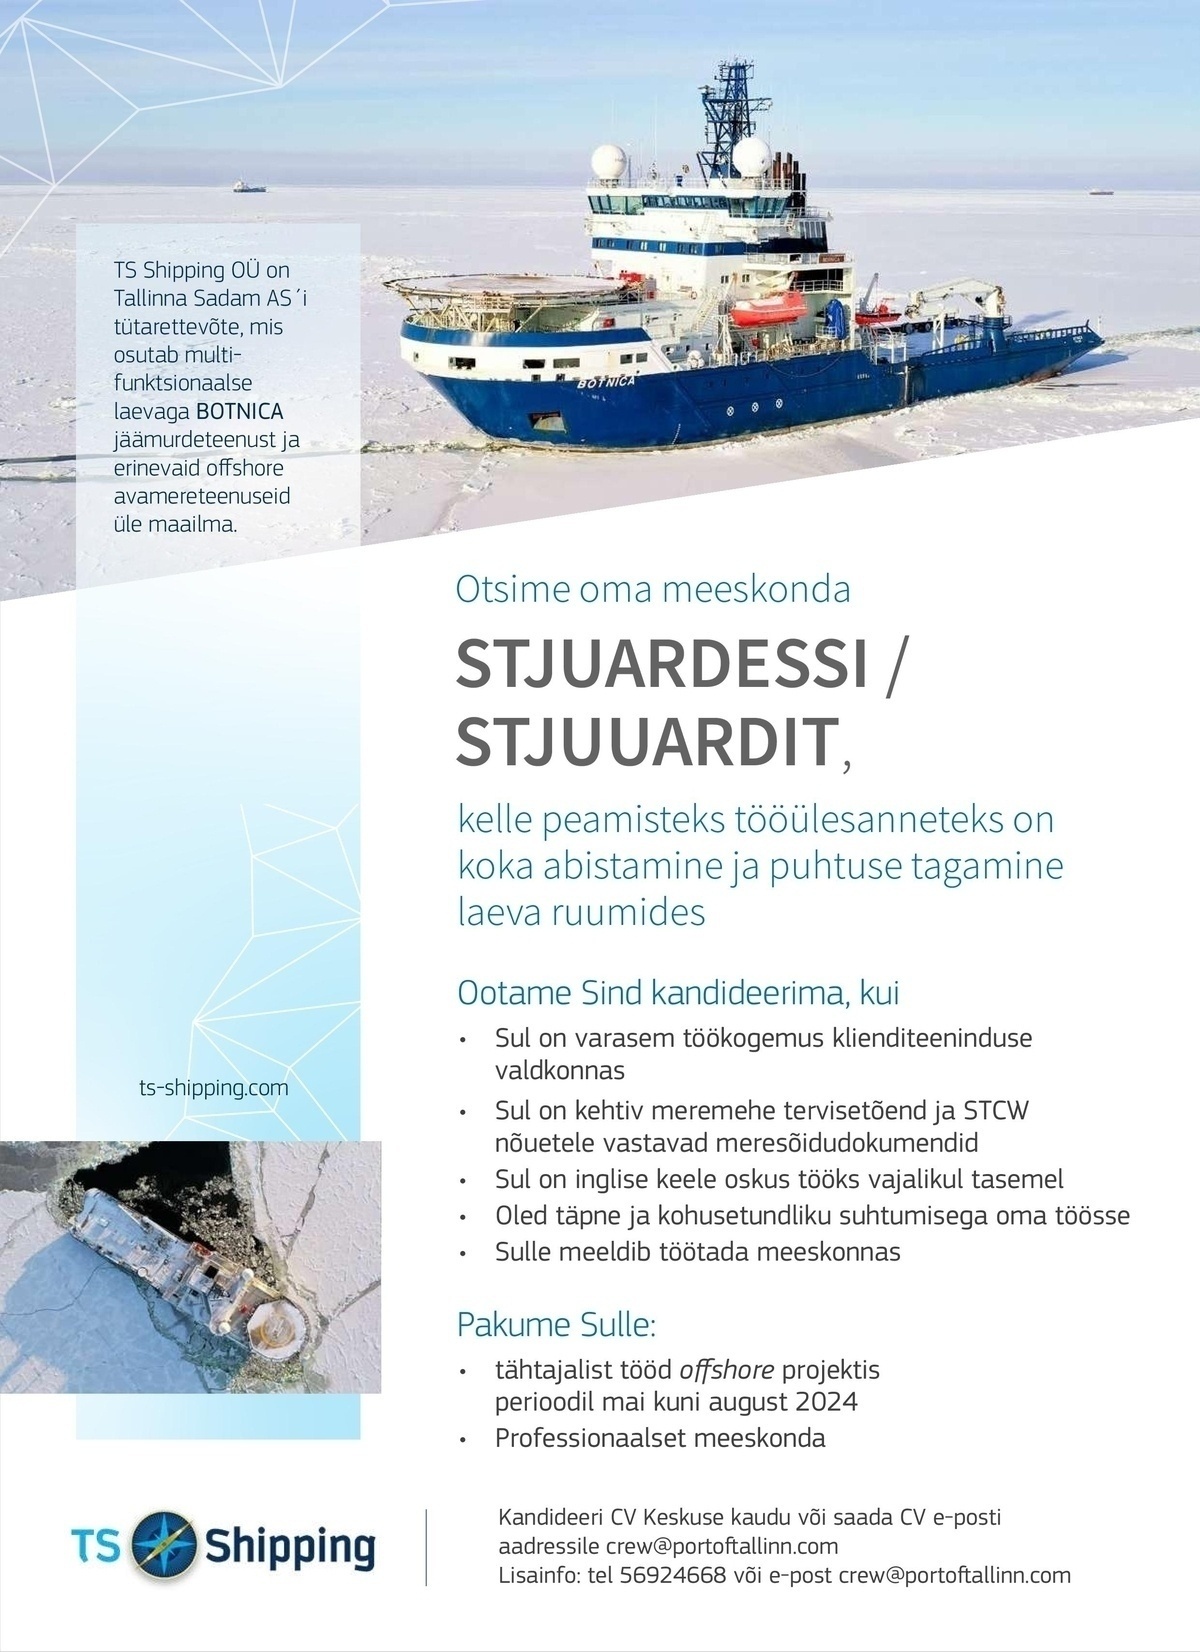 TS Shipping OÜ Stjuardessi/Stjuuardit